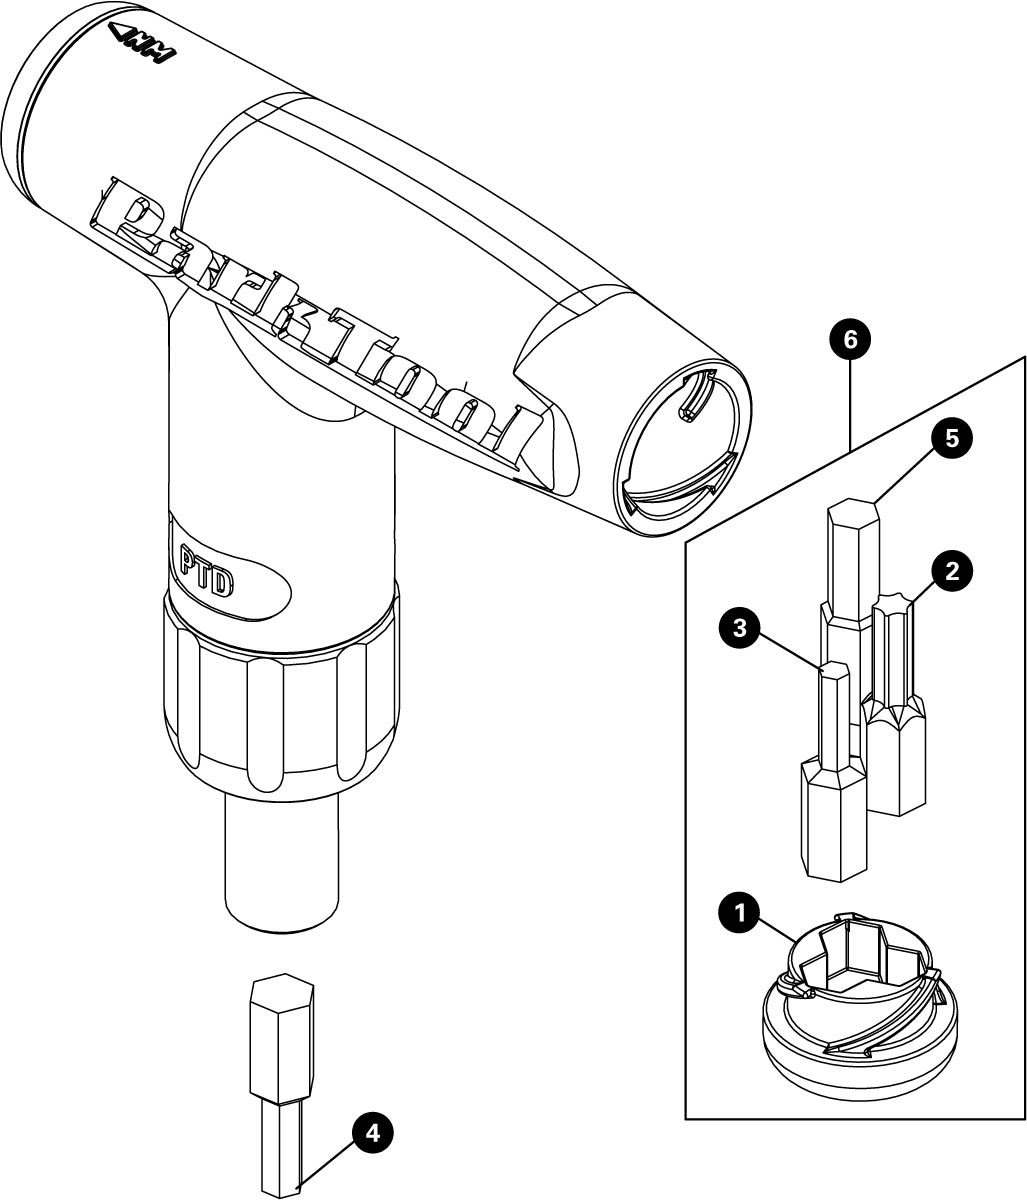 Parts diagram for PTD-4 Preset Torque Driver, click to enlarge